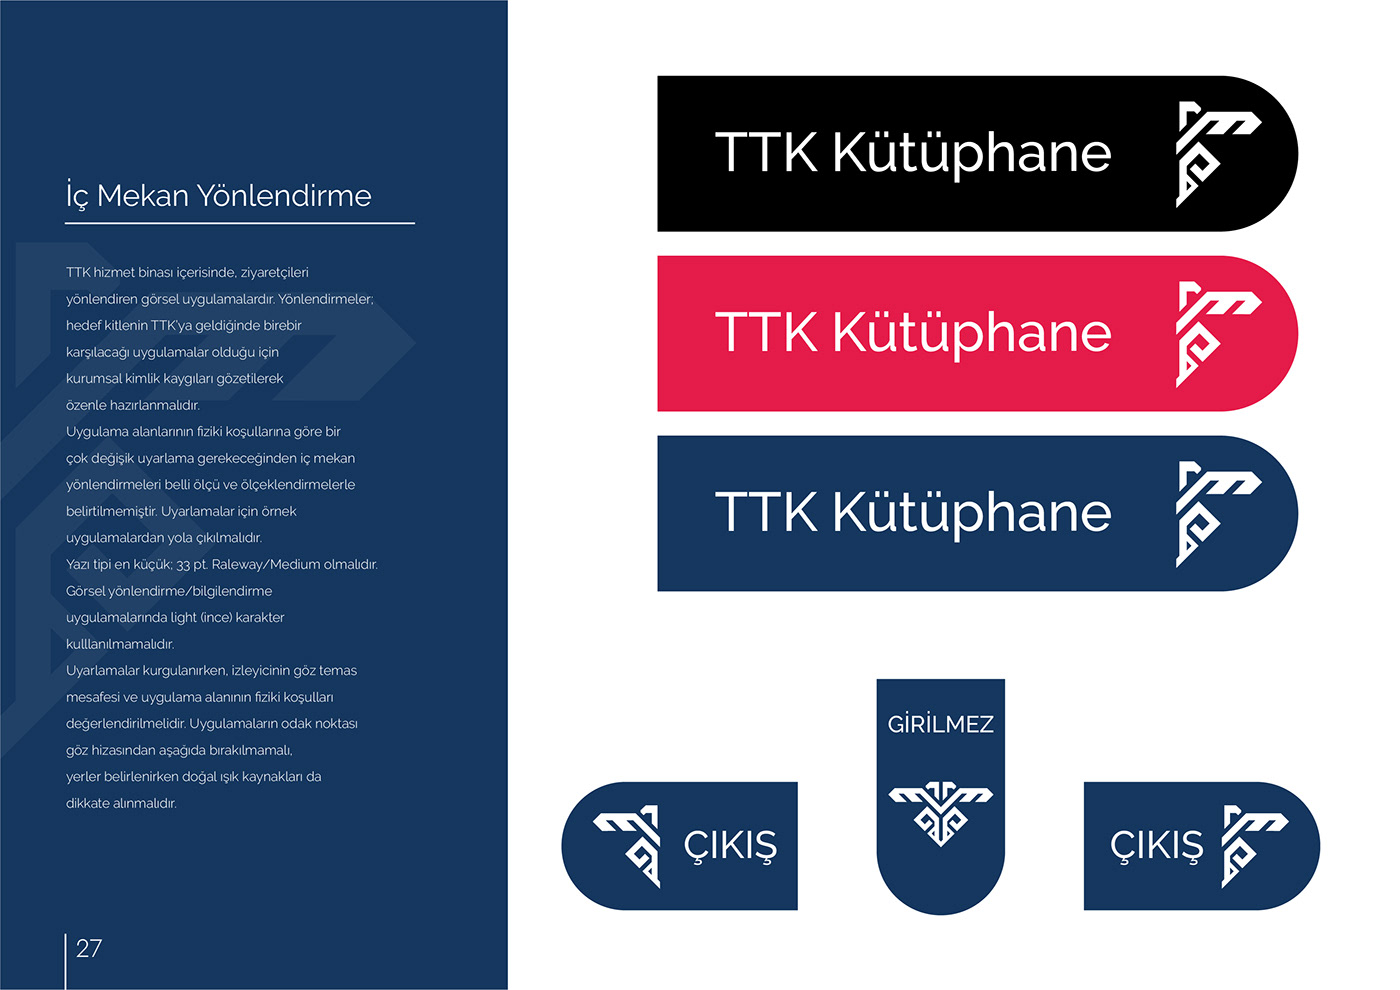 kurumsal kimlik Corporate Identity brand identity Logo Design visual identity Türk Tarih kurumu